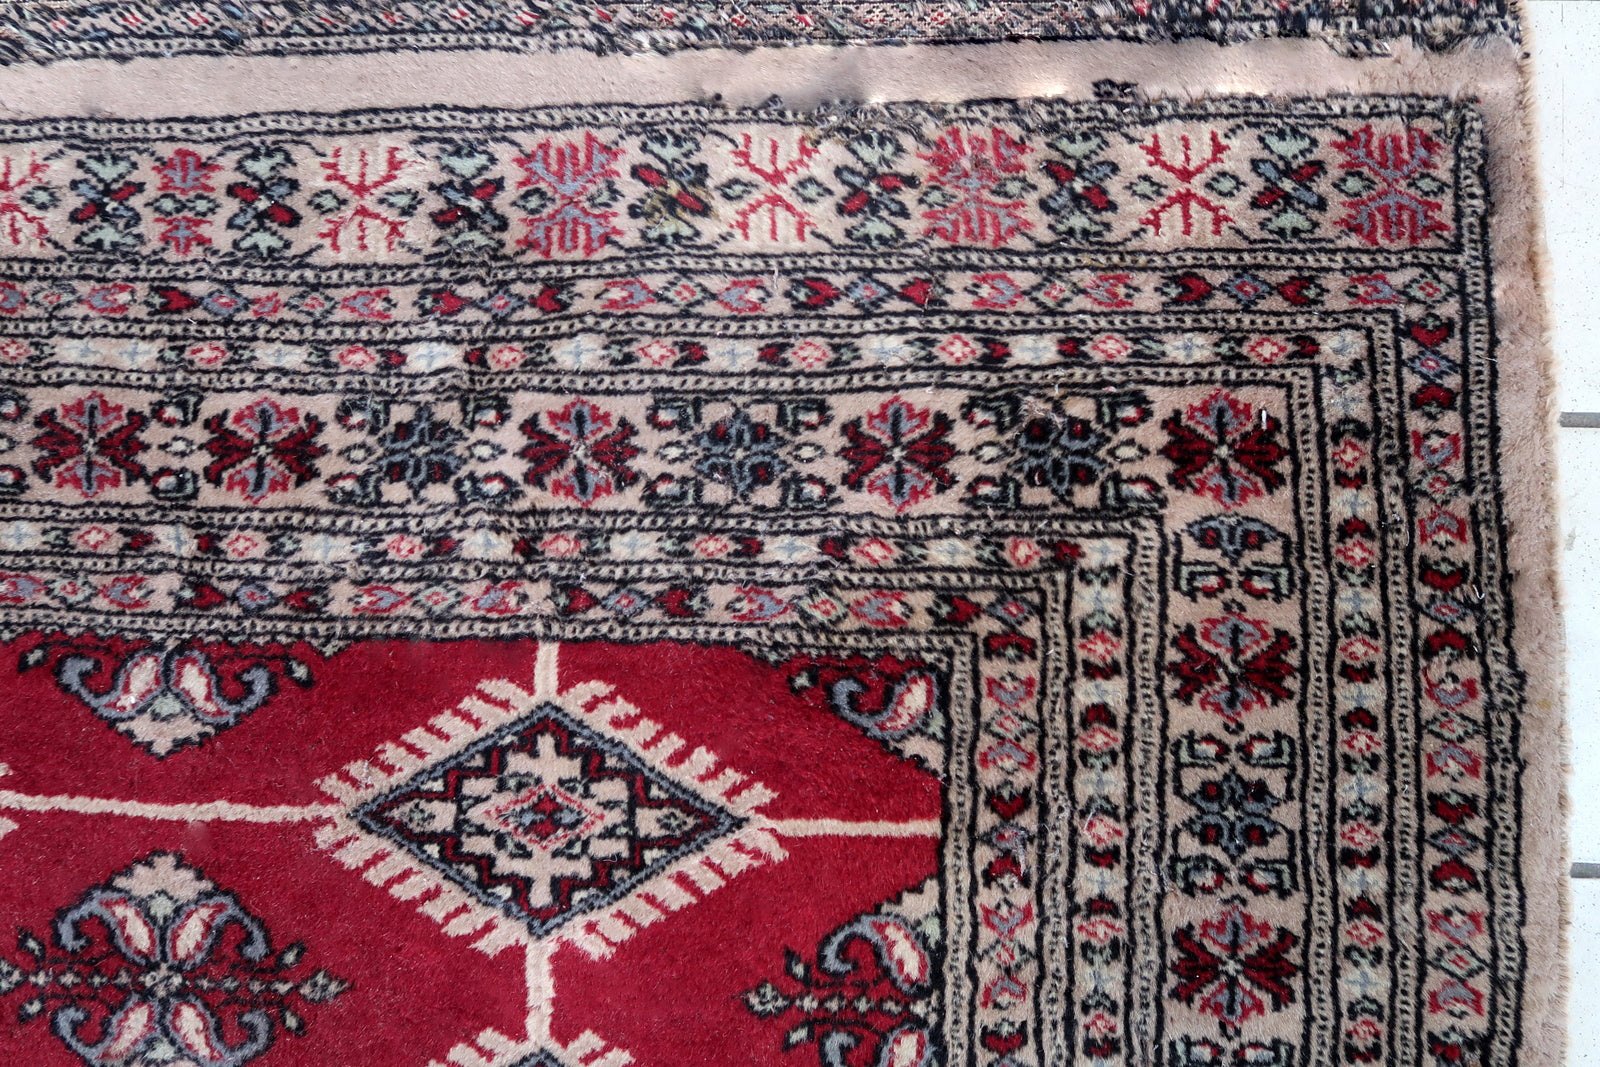 Handmade vintage Uzbek Bukhara rug 1960s